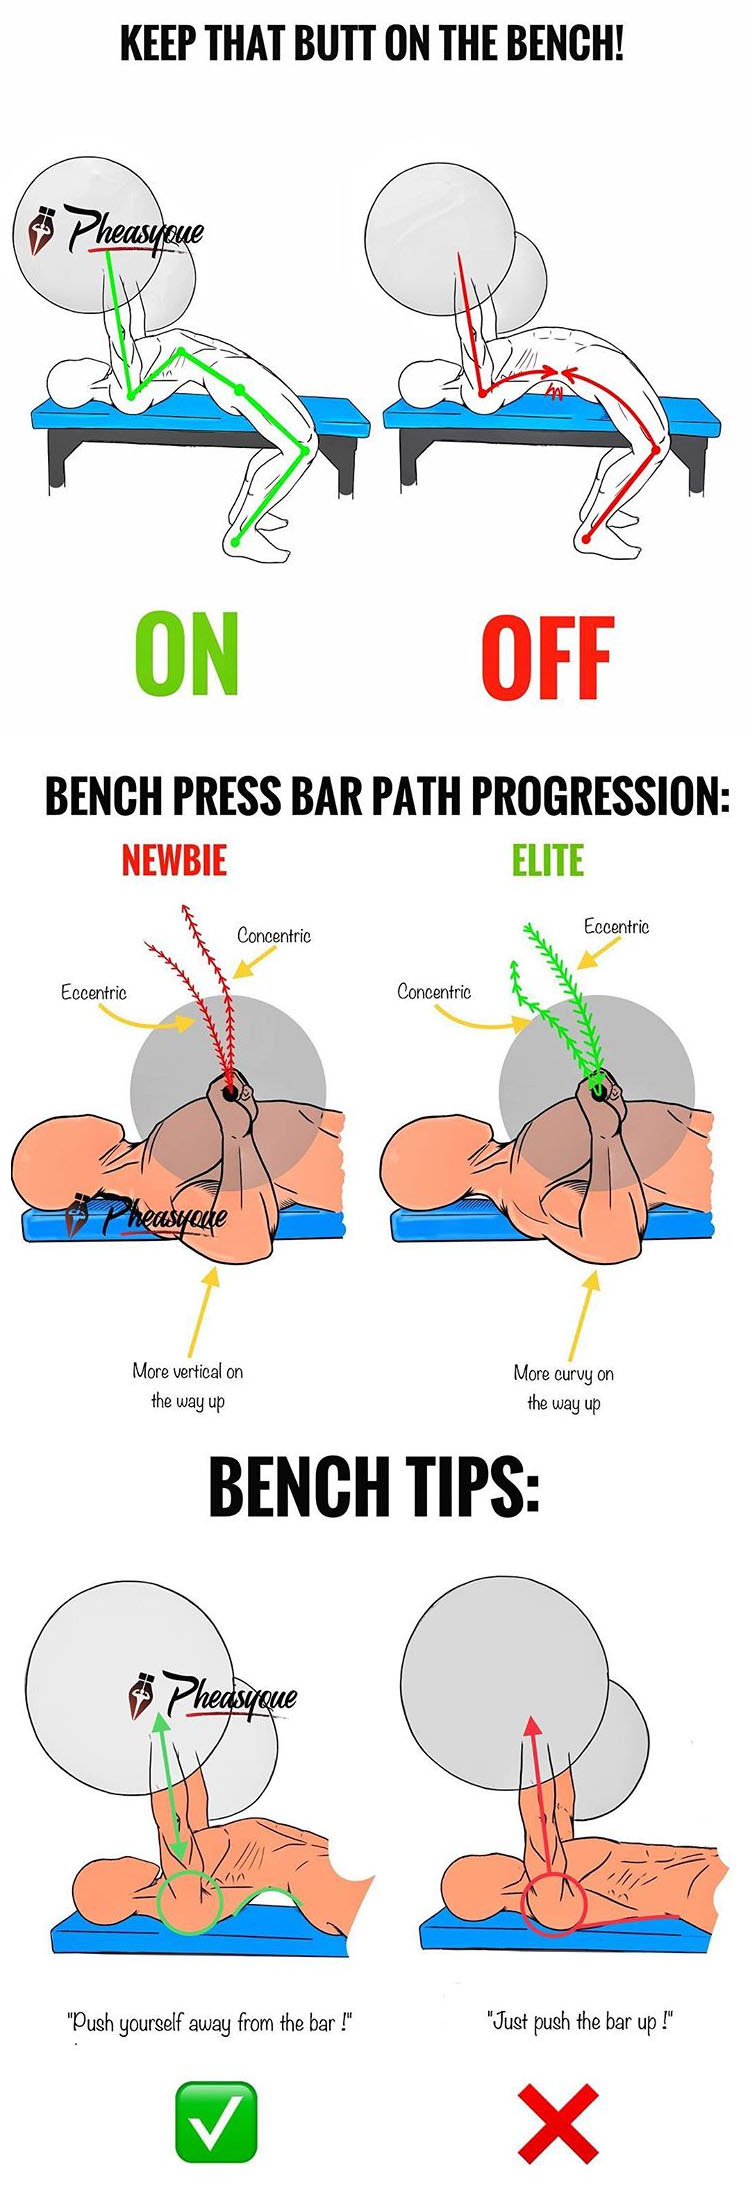 Bench Press Tips